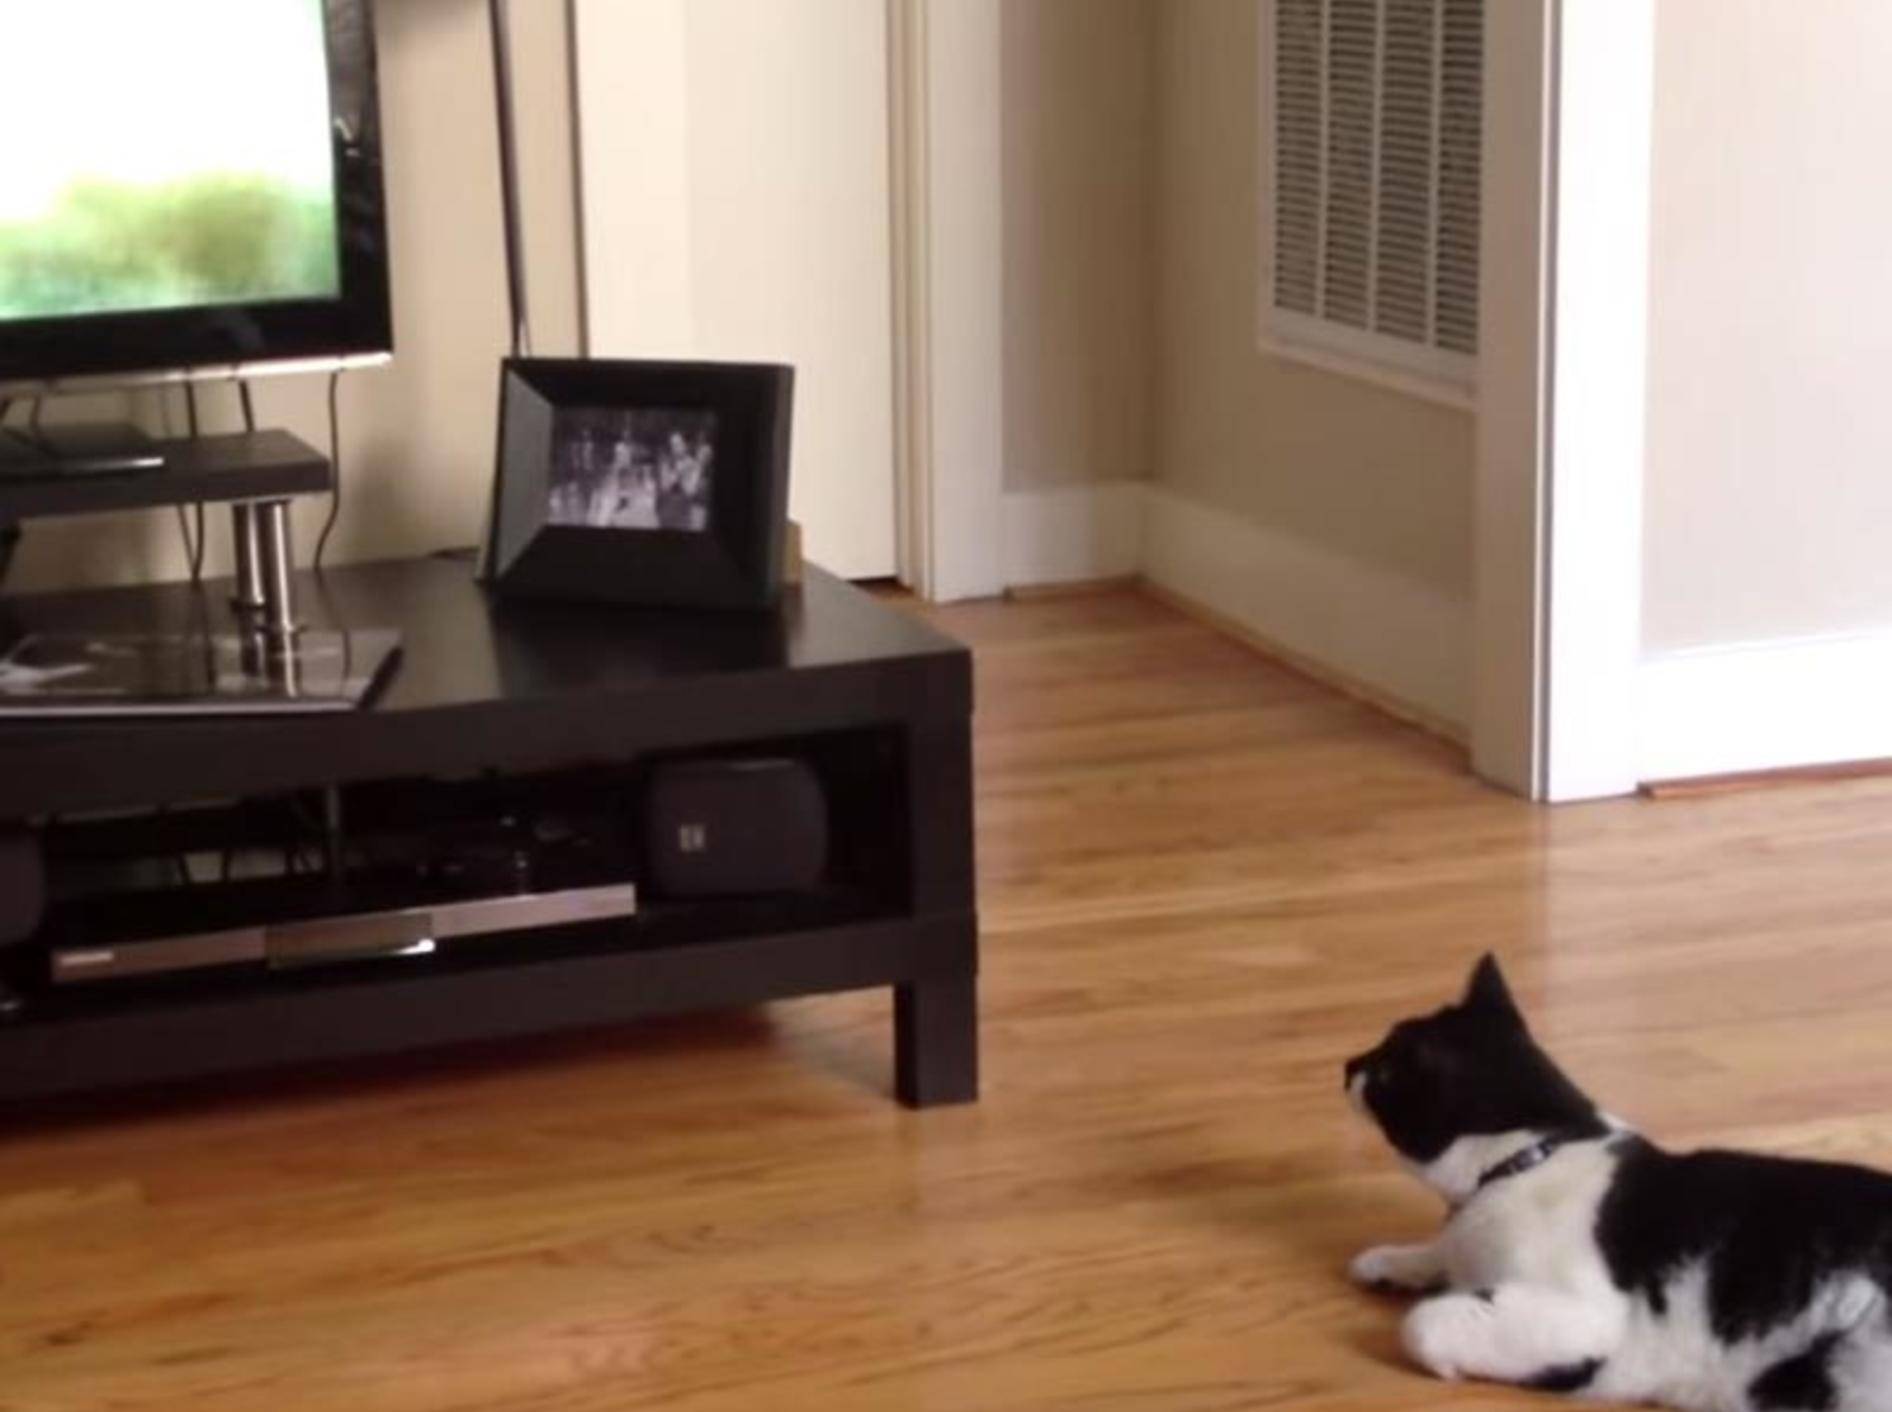 Süße Katze liebt Dokusendungen im TV – Bild: Youtube / CE54R